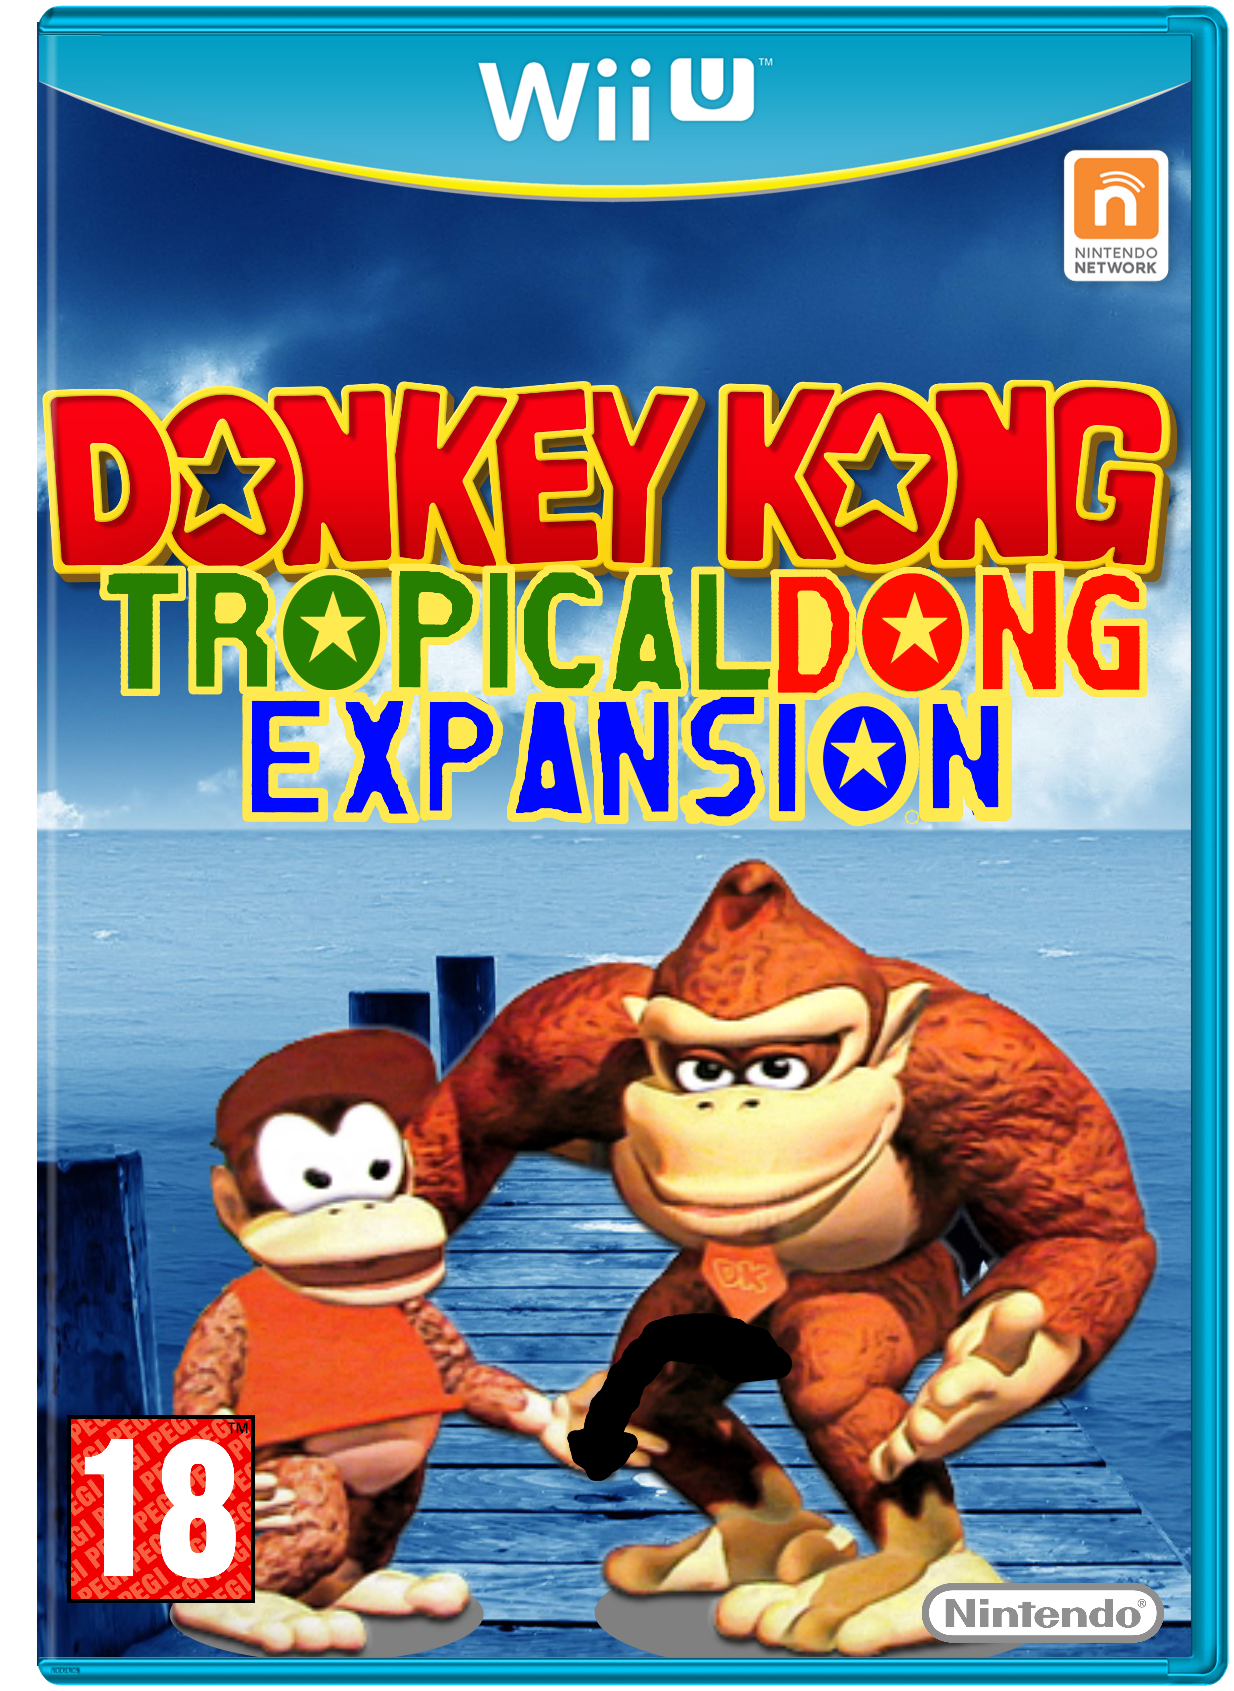 Donkey Kong: Tropical Dong Expansion box cover